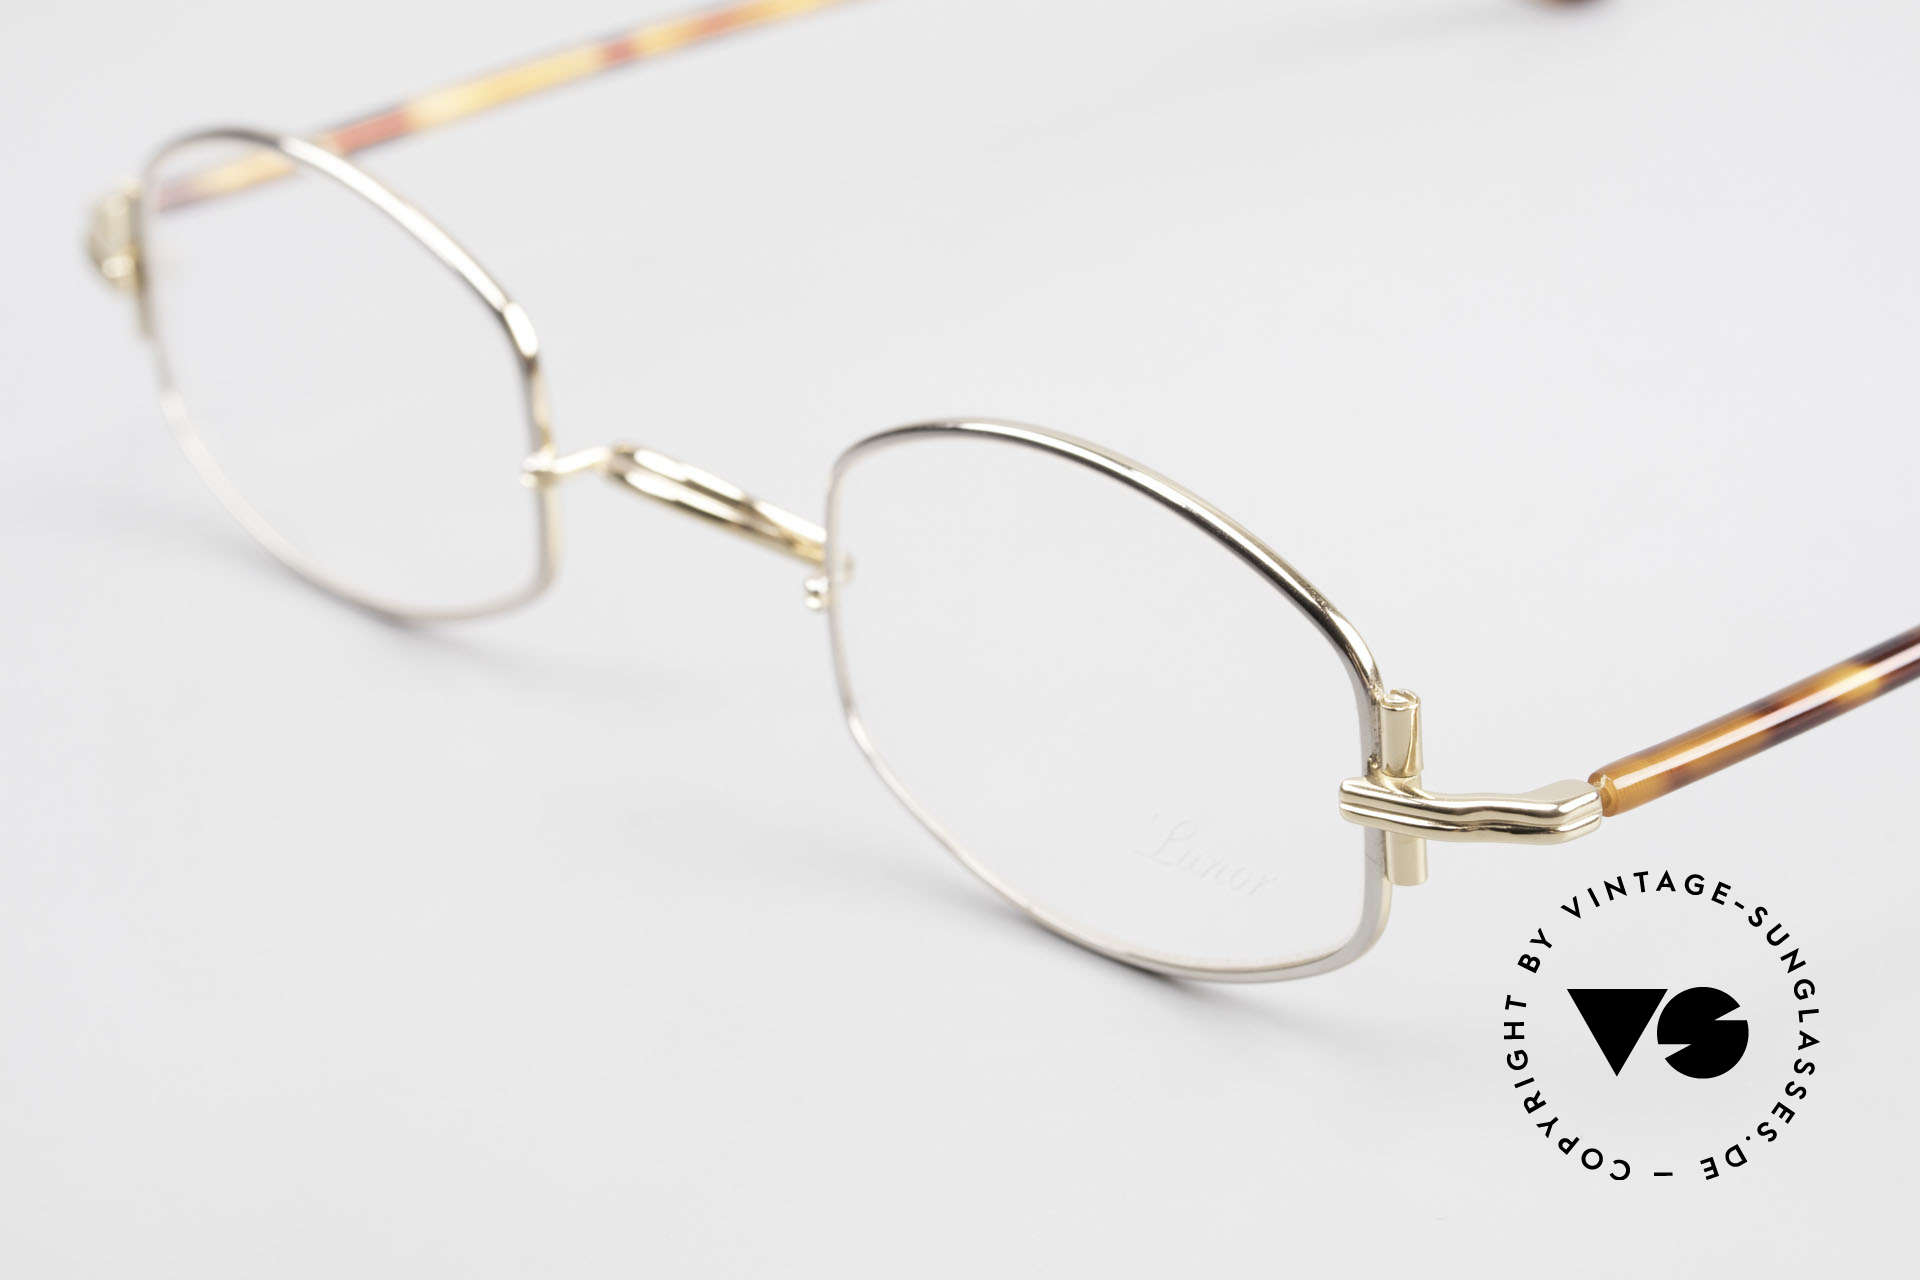 Lunor XA 03 Lunor Eyeglasses True Vintage, model "XA 03" with anatomic bridge and acetate temples, Made for Men and Women